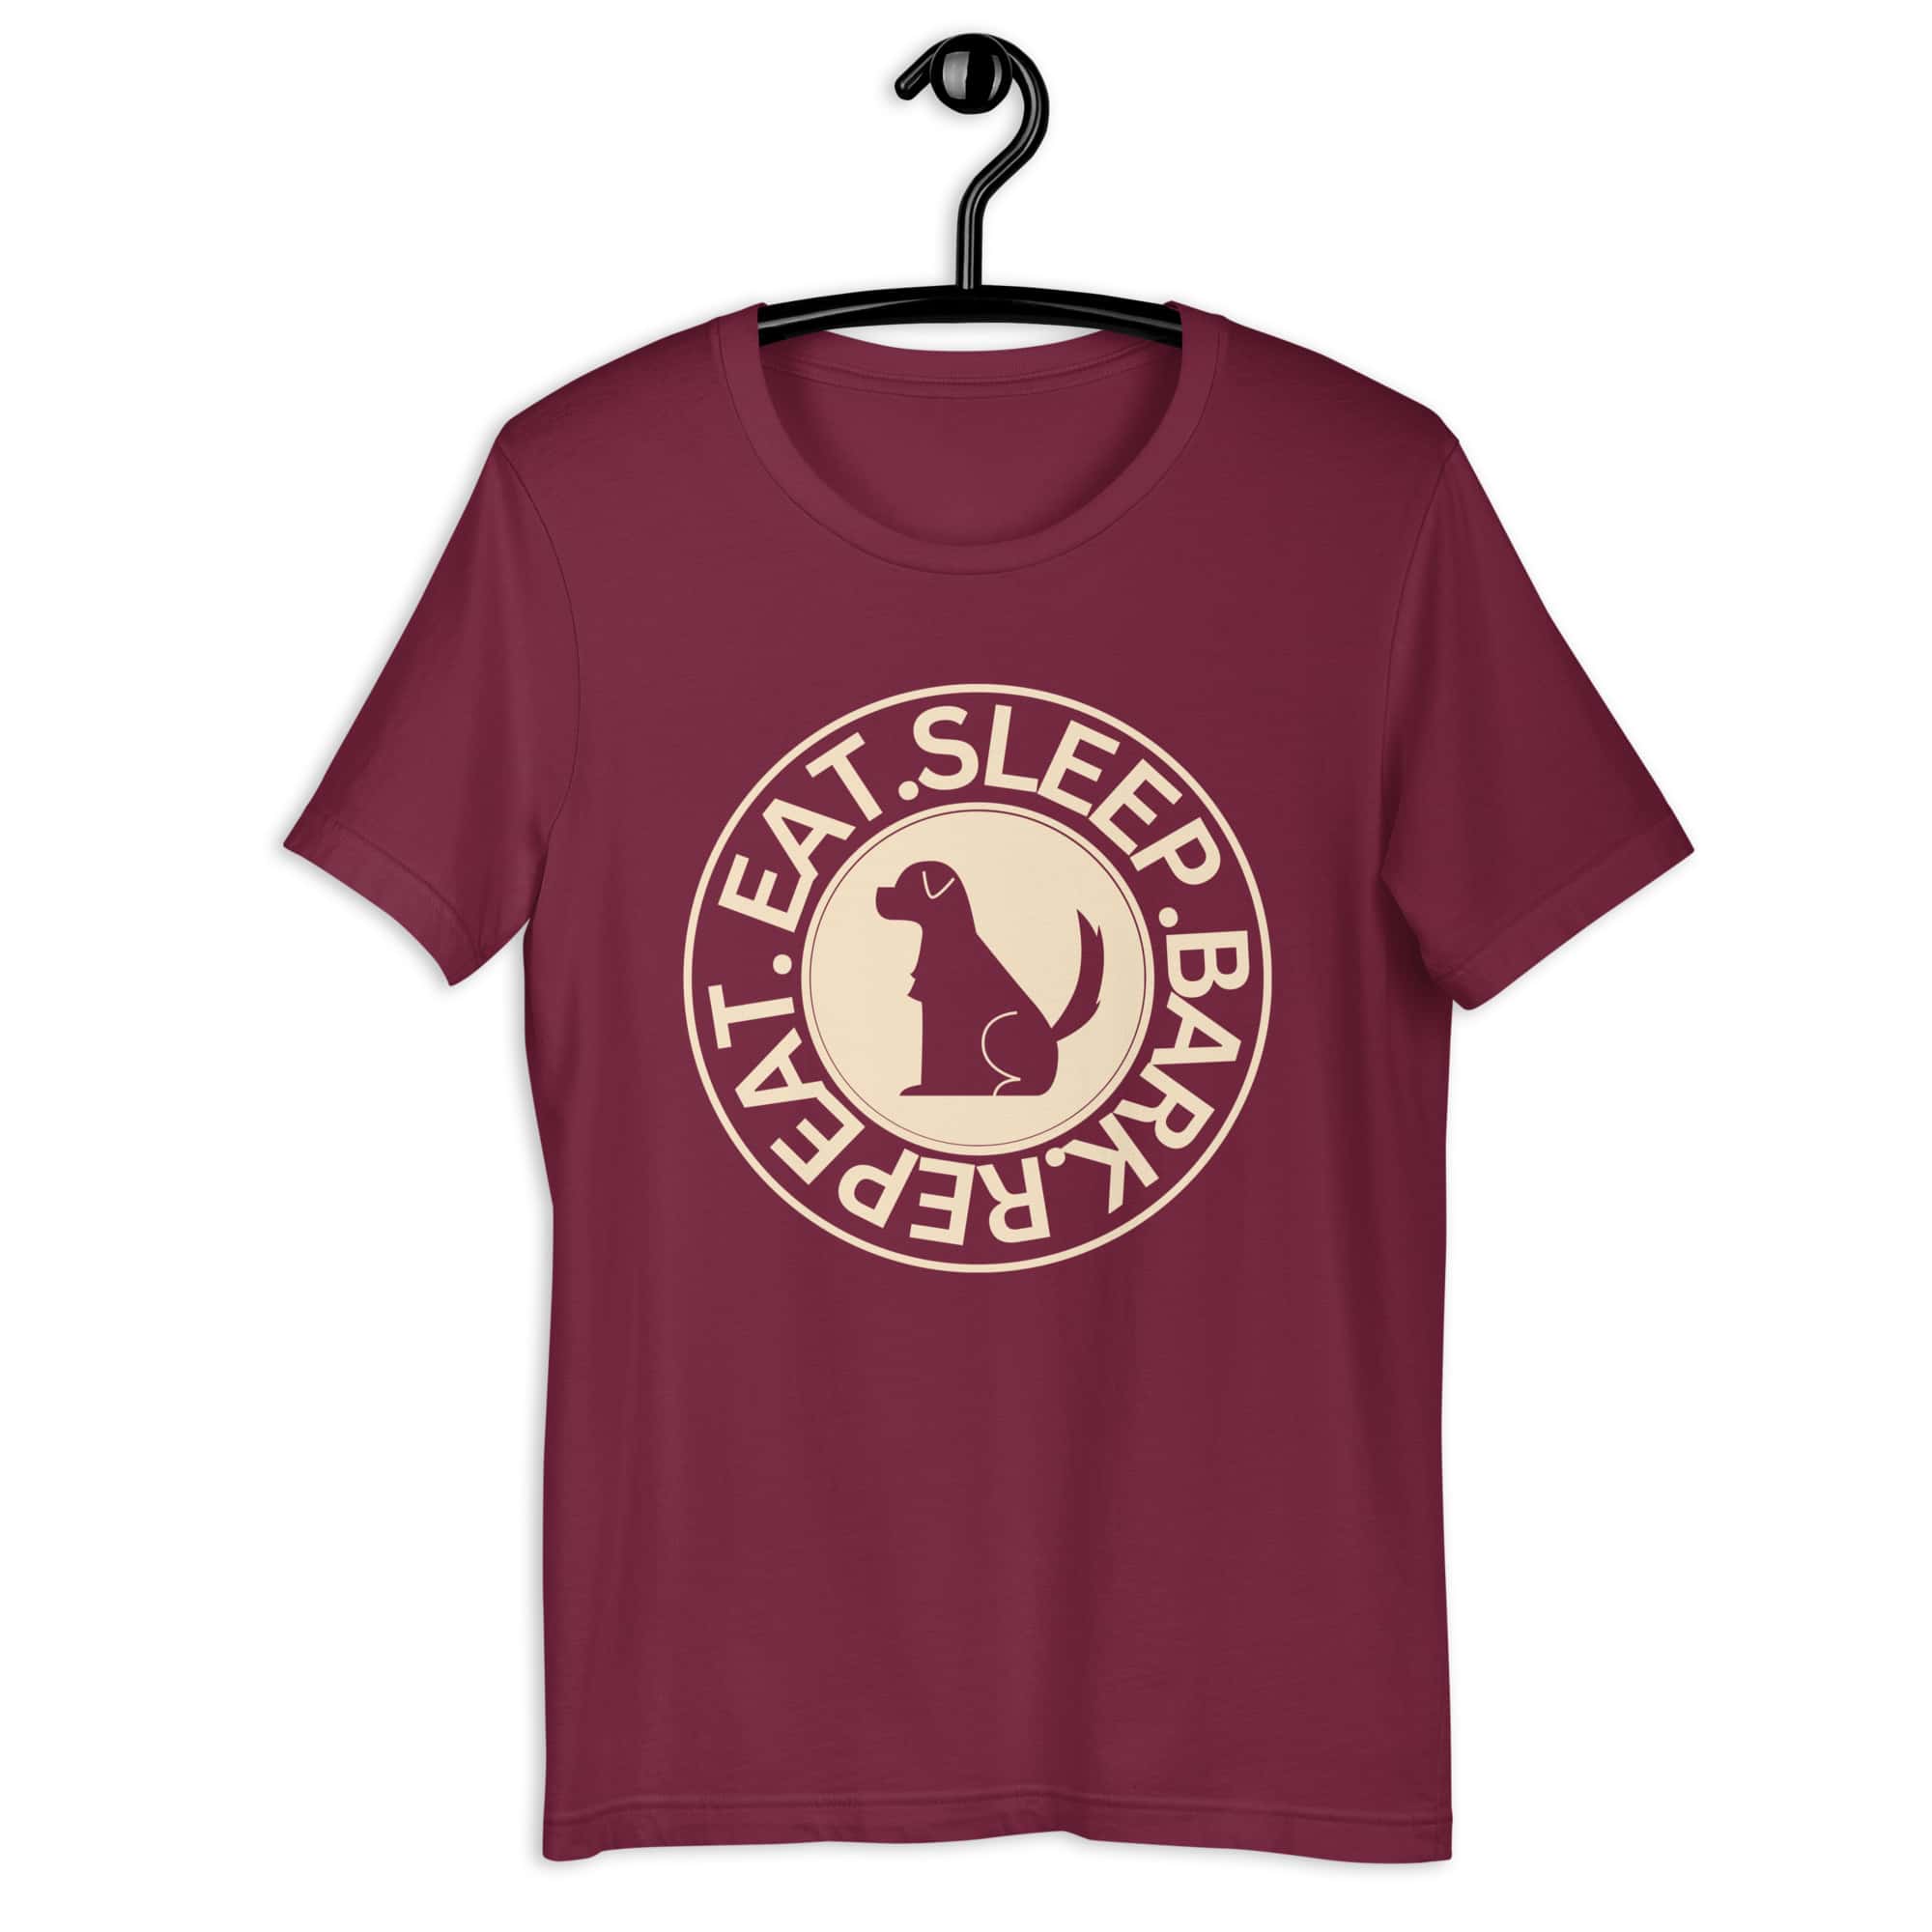 Eat Sleep Bark Repeat Ansylvanian Hound Unisex T-Shirt. Maroon